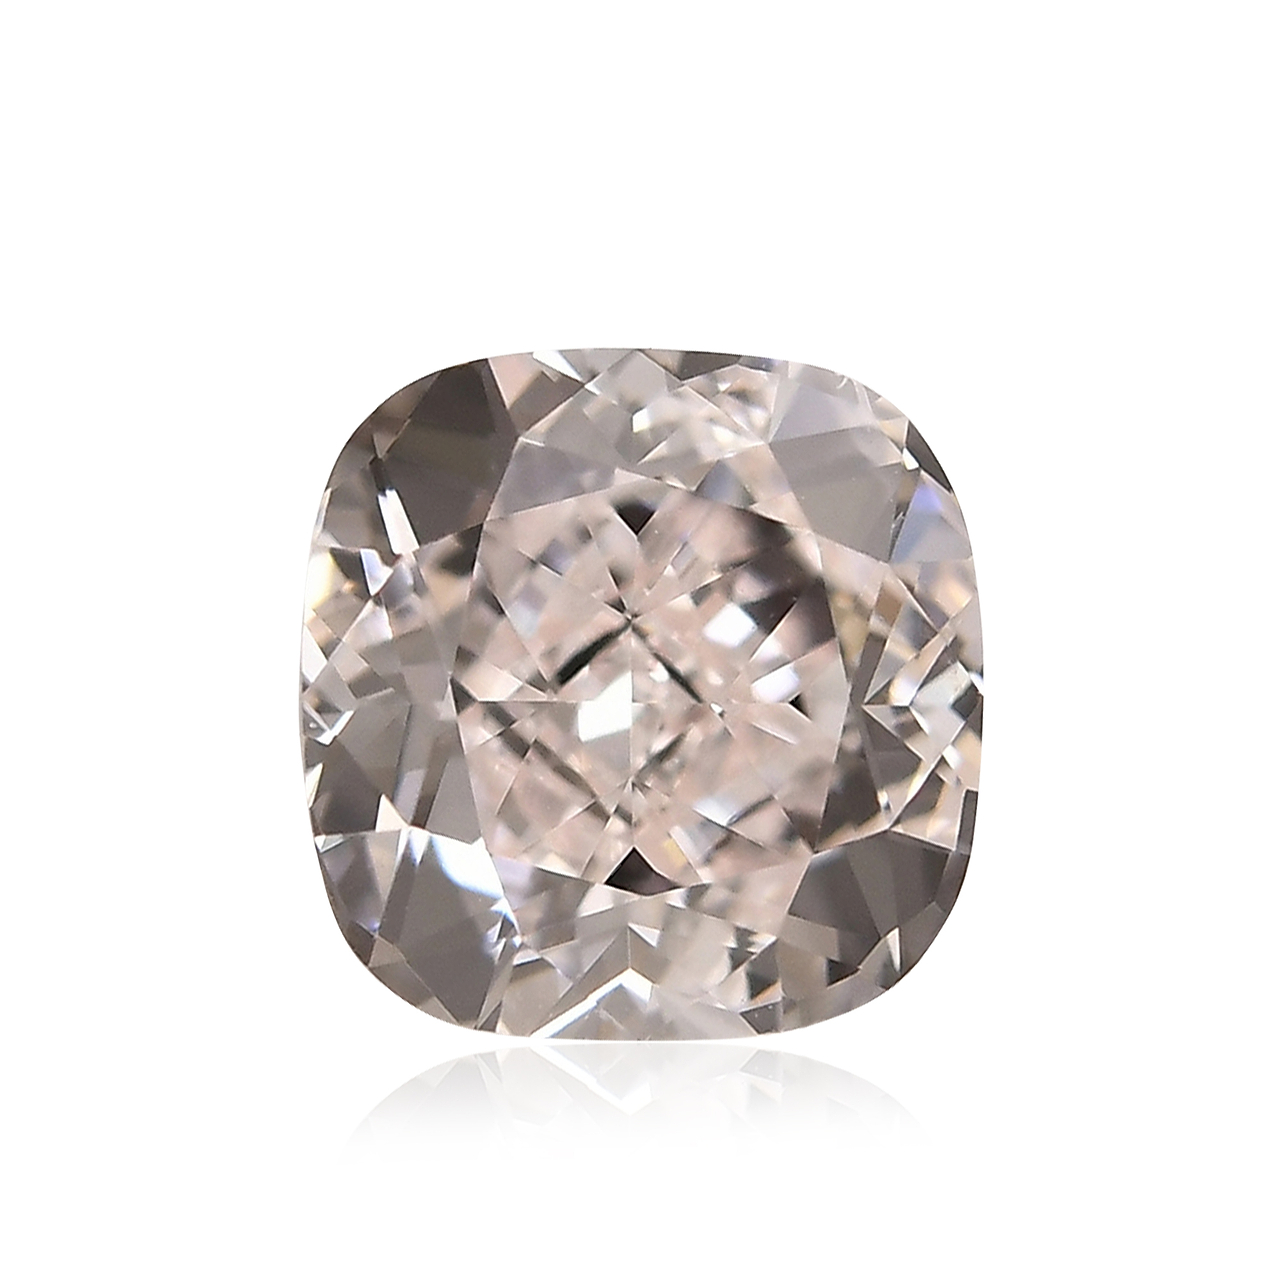 carat, Fancy Pink Diamond, Cushion SI1 Clarity, GIA, SKU 422821